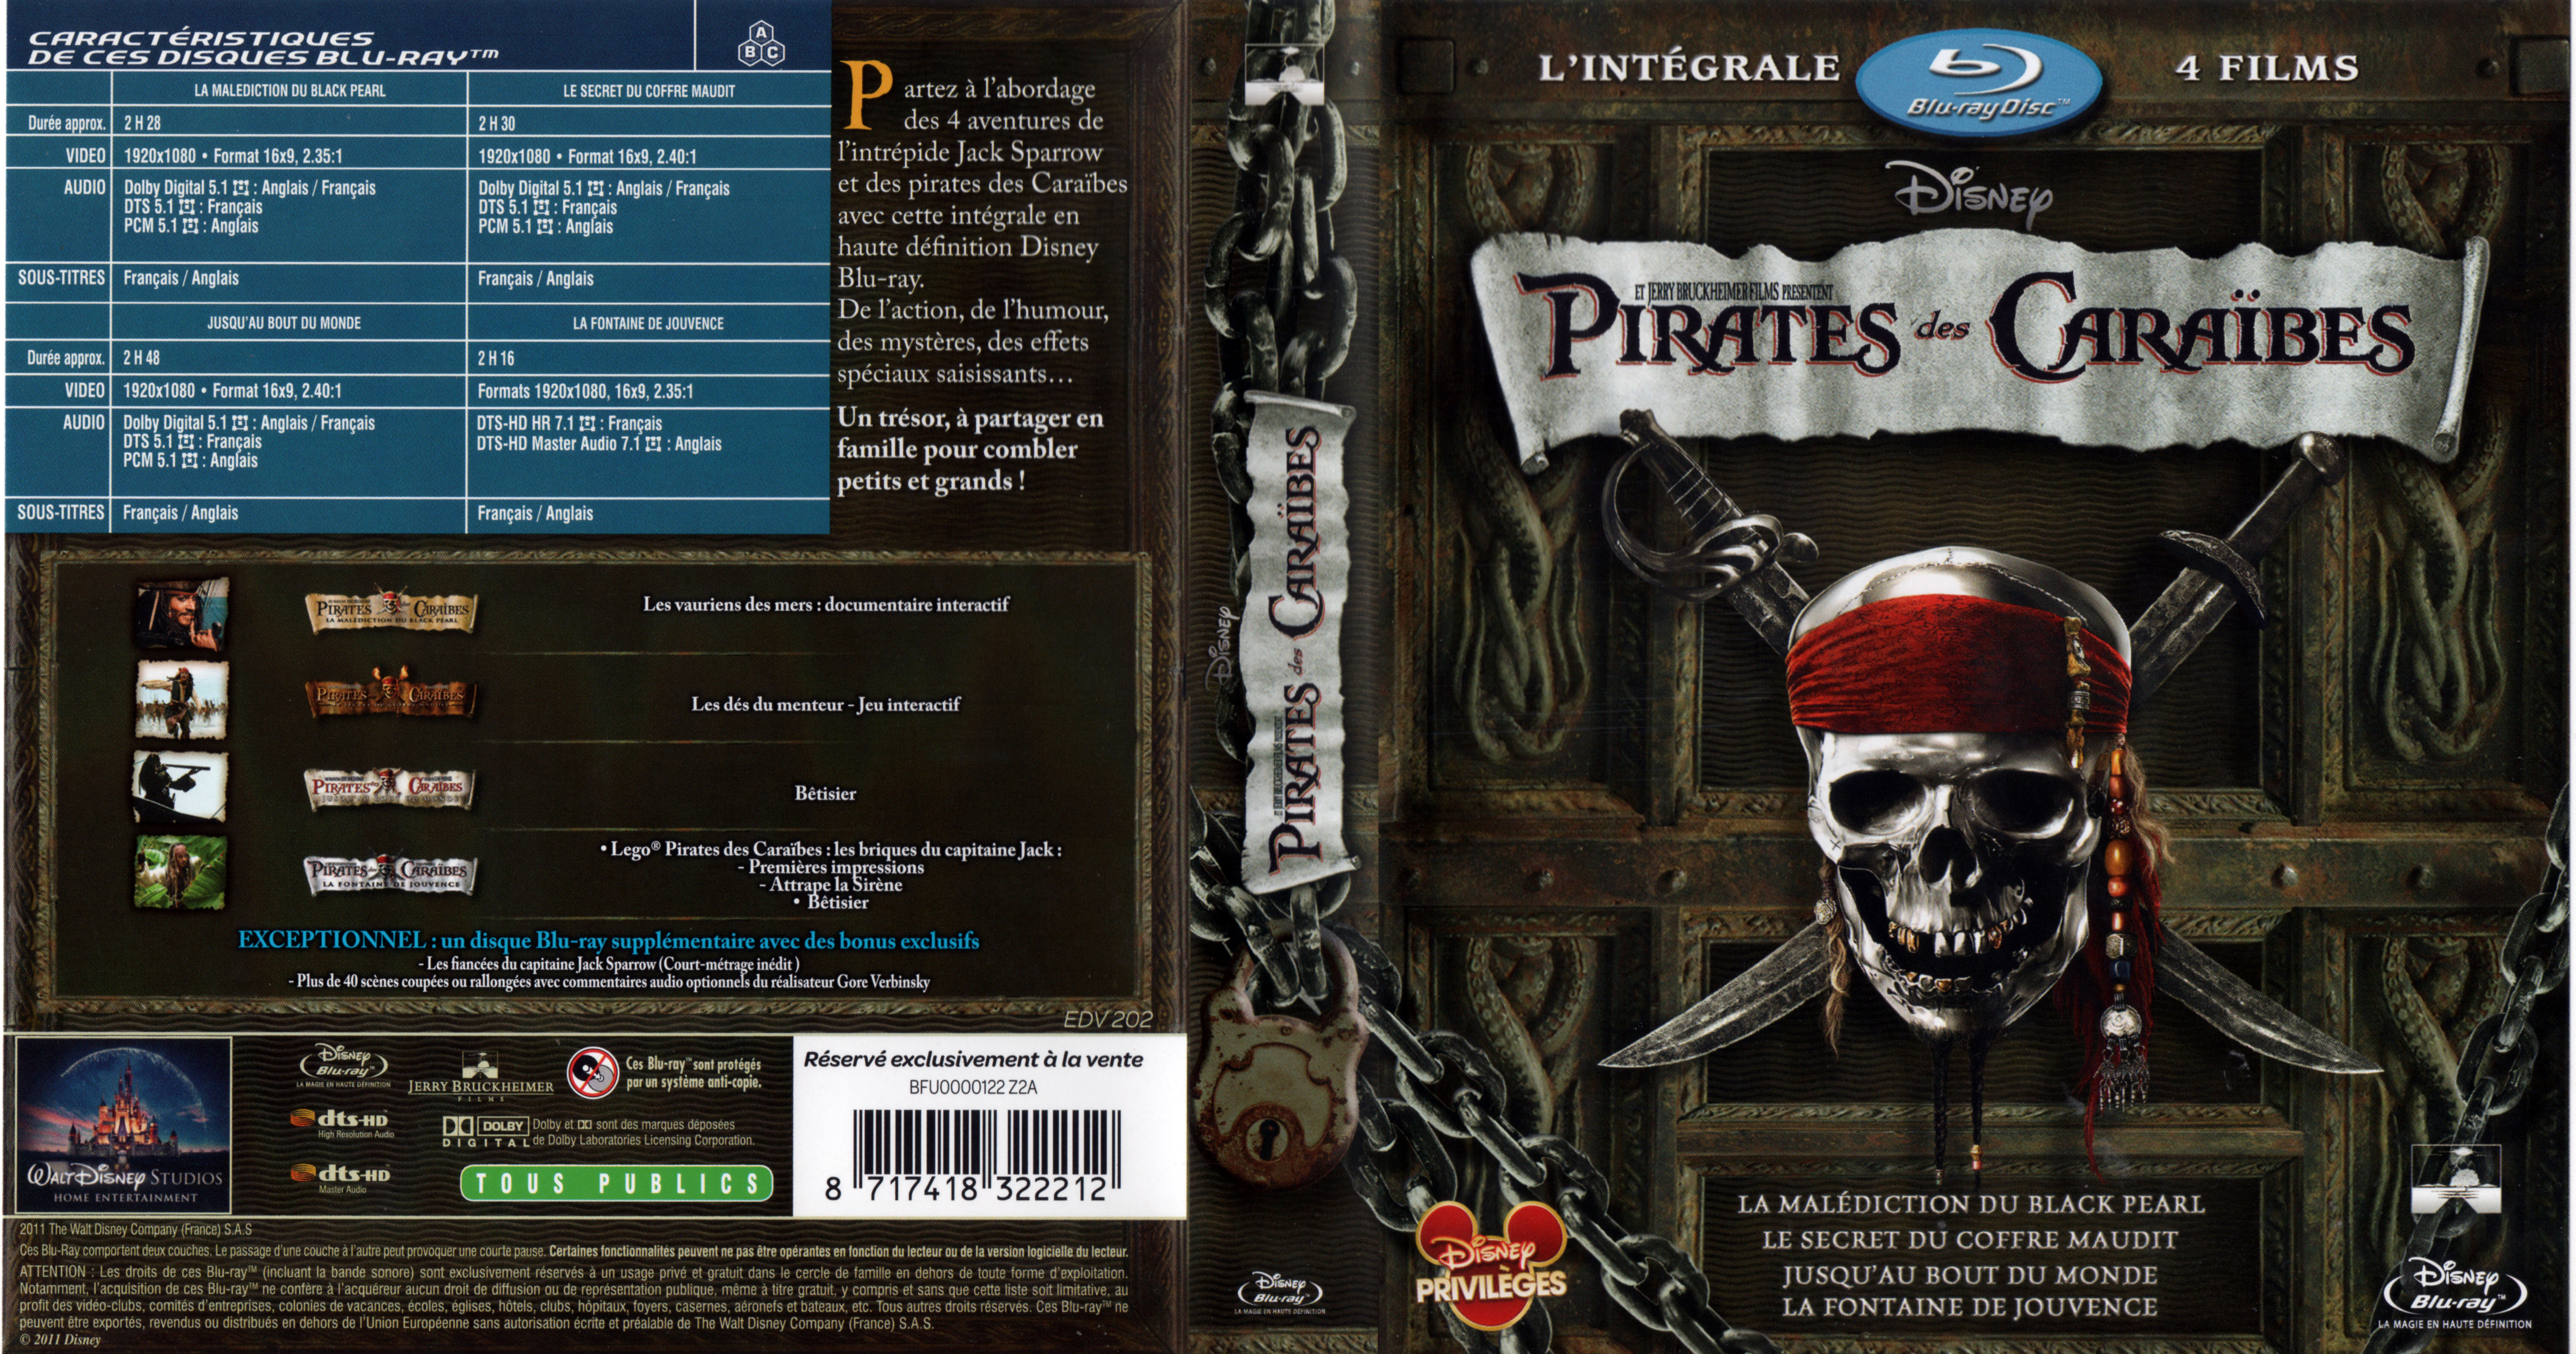 Jaquette DVD Pirates des Caraibes Integrale (BLU-RAY)